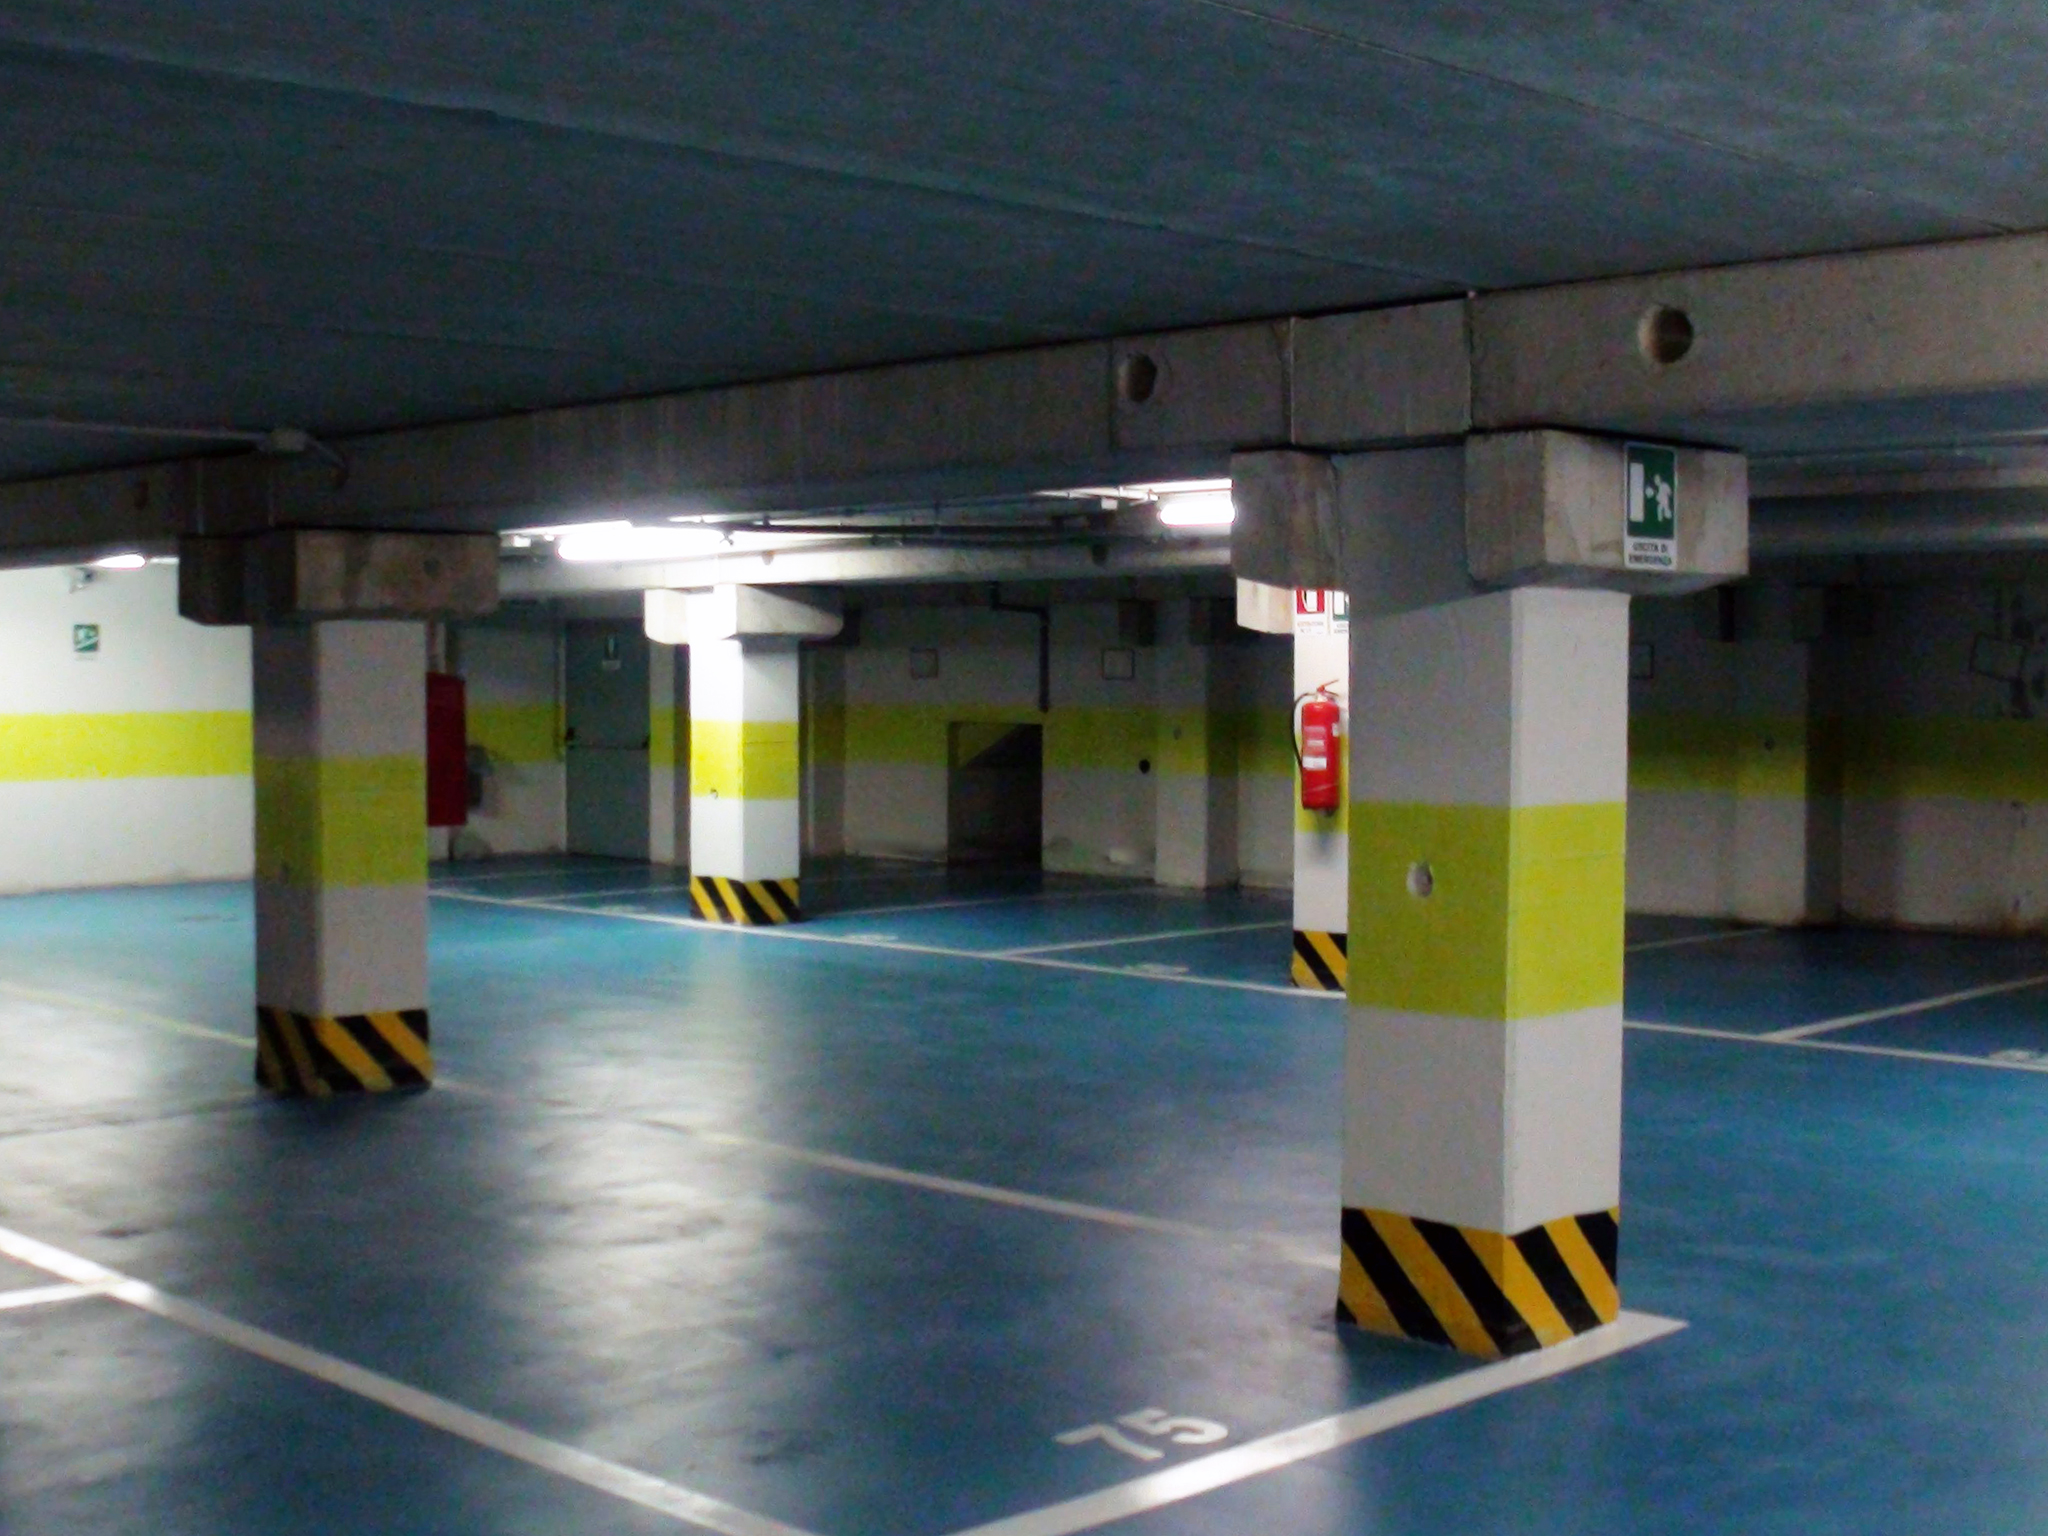 Indoor parking lots to rent in the garage at the second basement floor - Atlantic Business Center - Milan